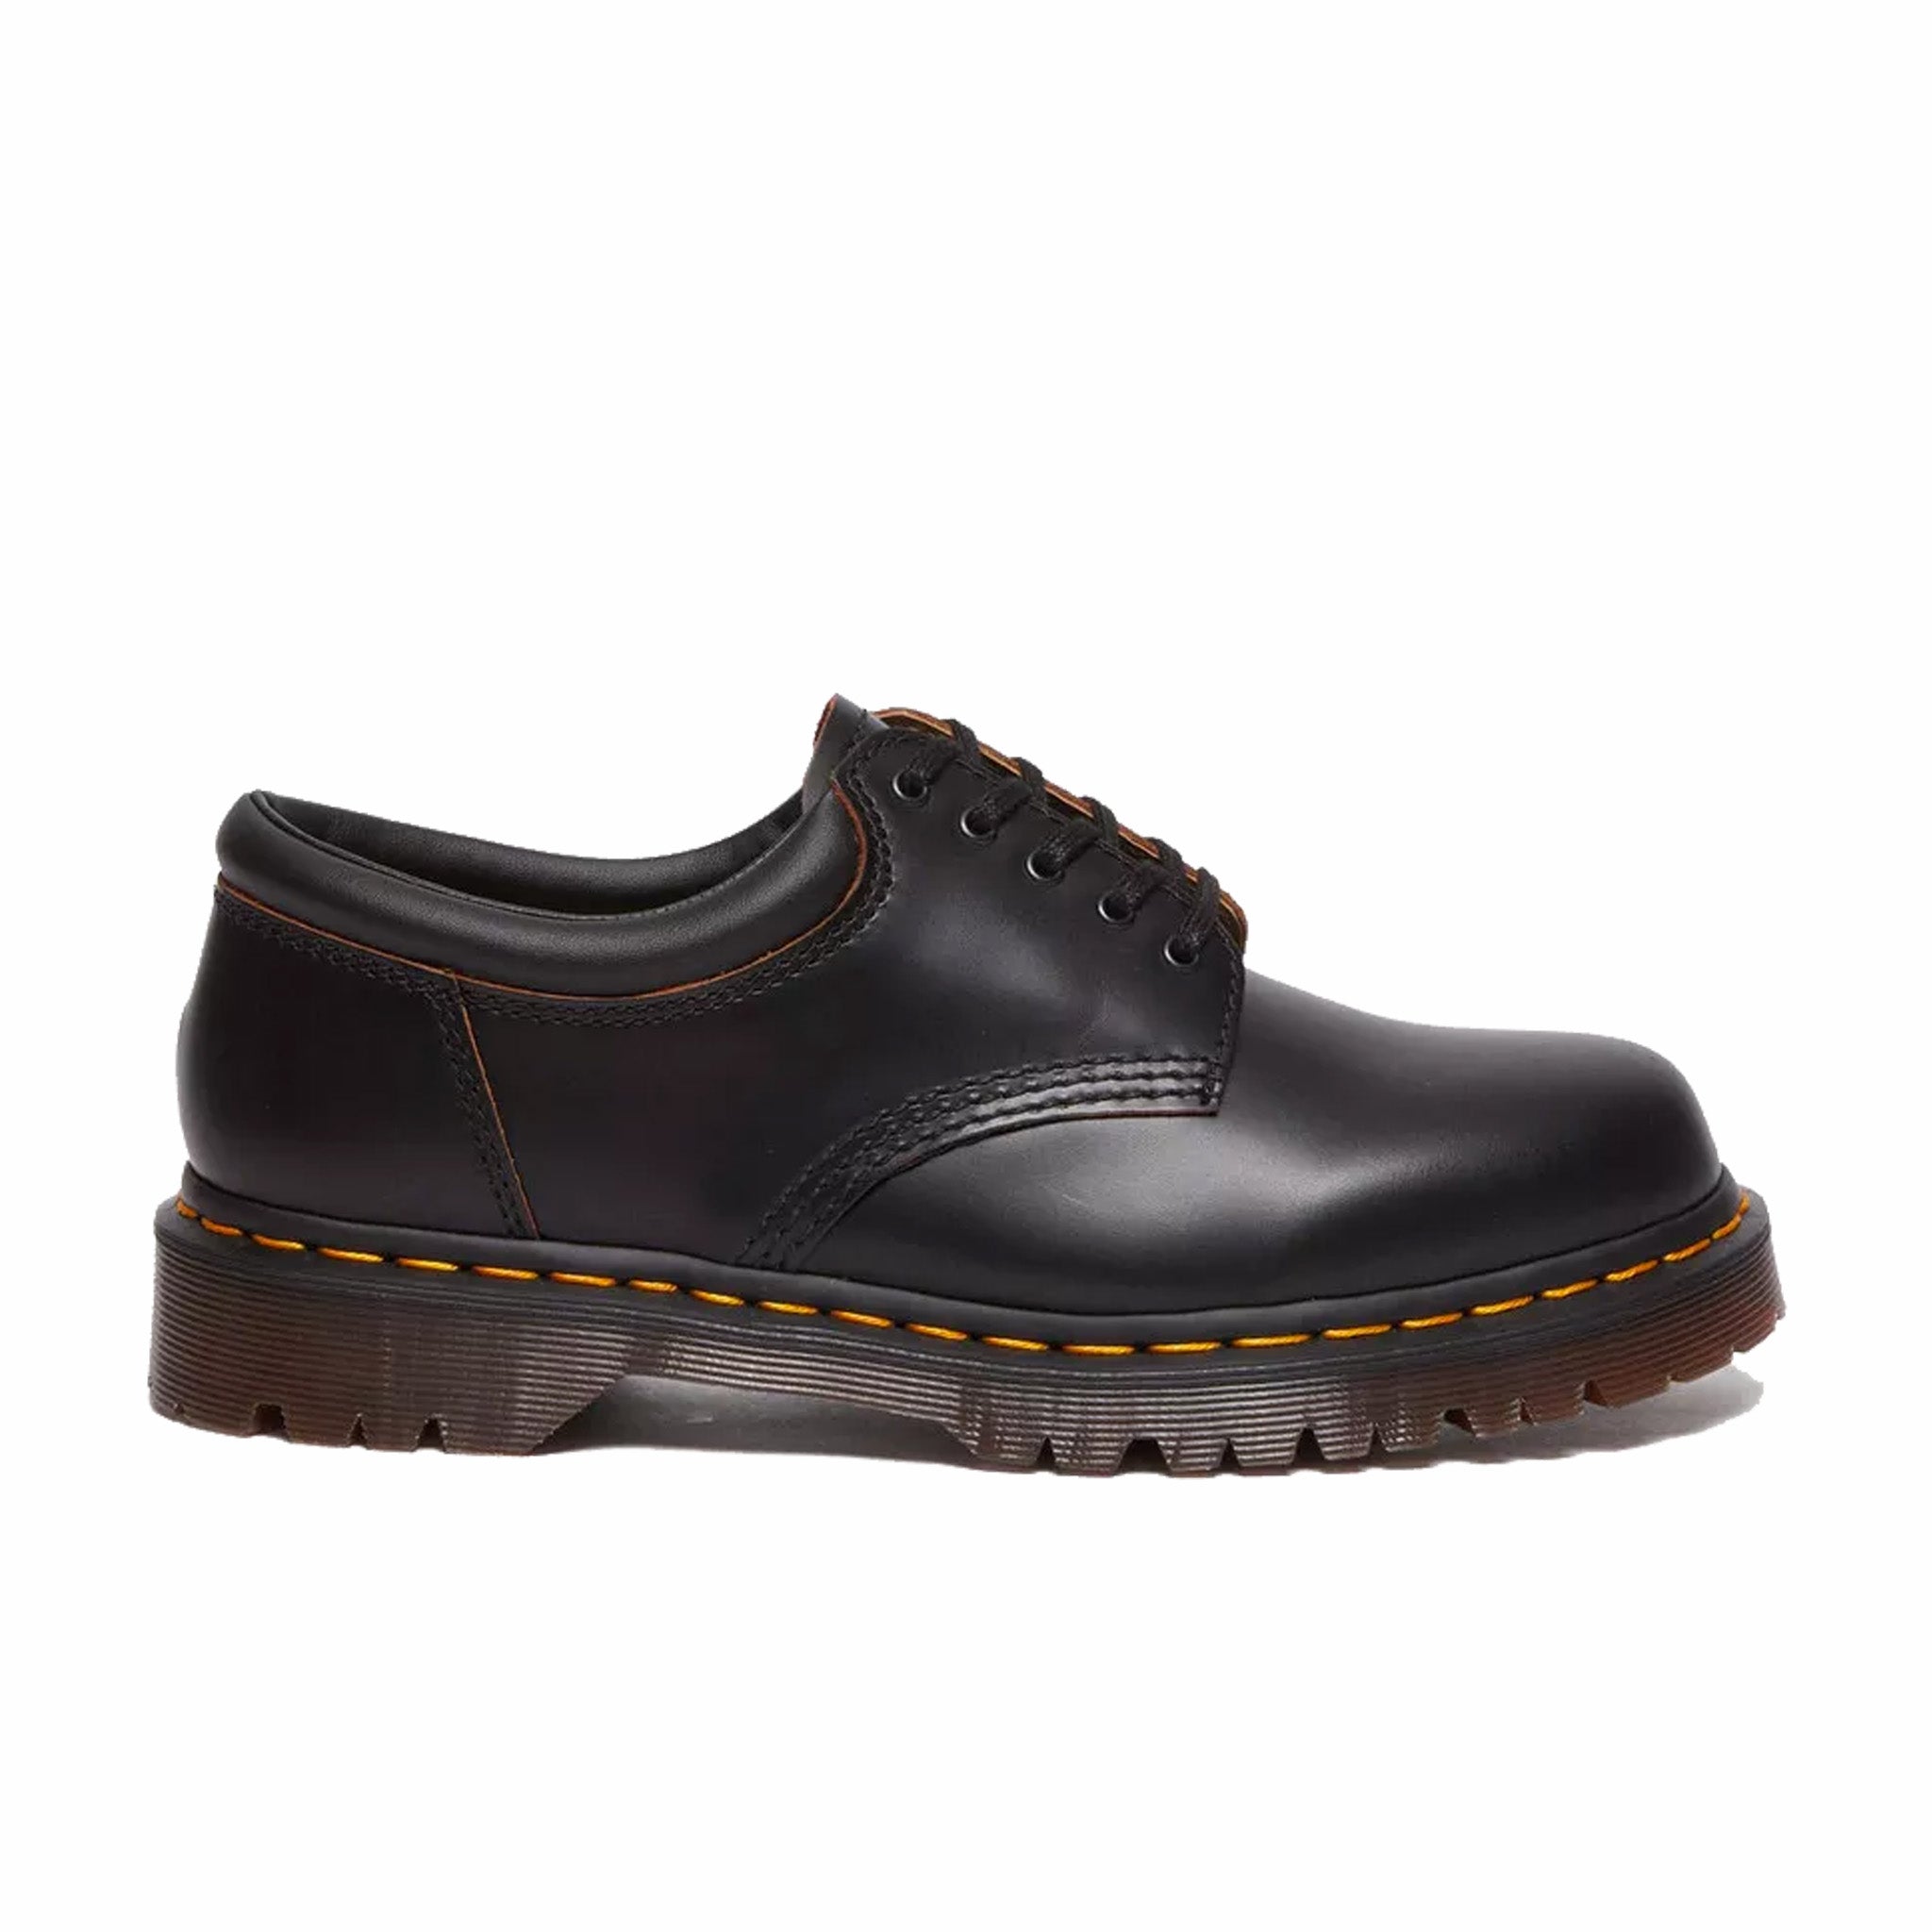 Dr. Martens 8053 Vintage Smooth Leather Oxford Shoes (Black) - August Shop